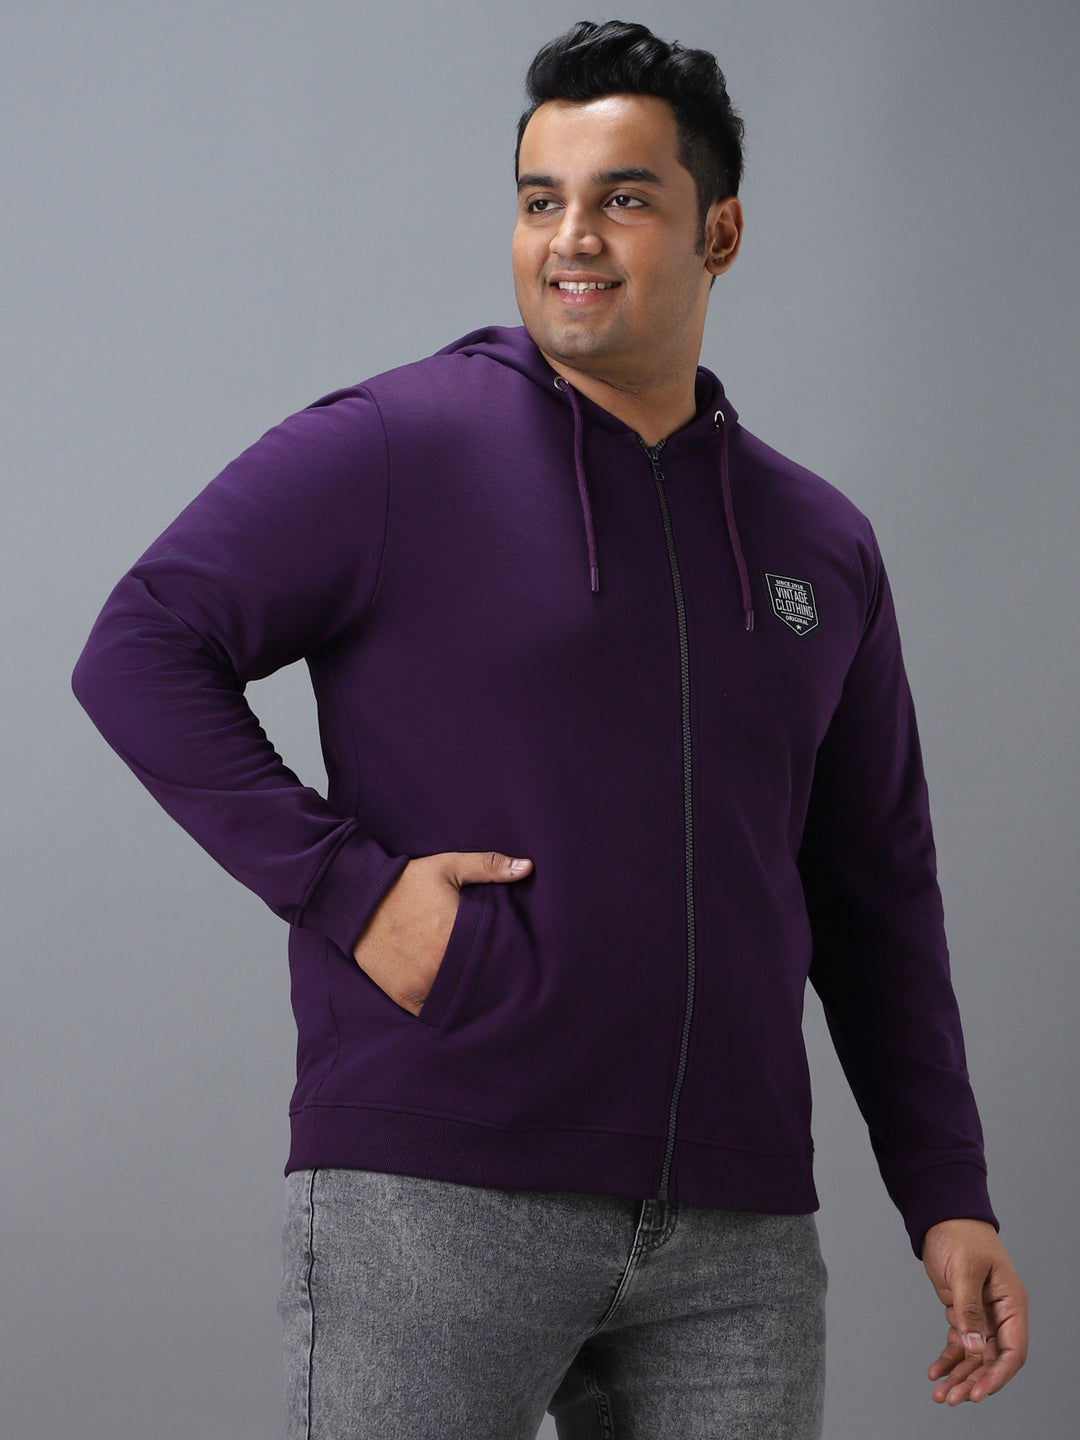 Plus Men's Purple Cotton Solid Zippered Hooded Neck Sweatshirt